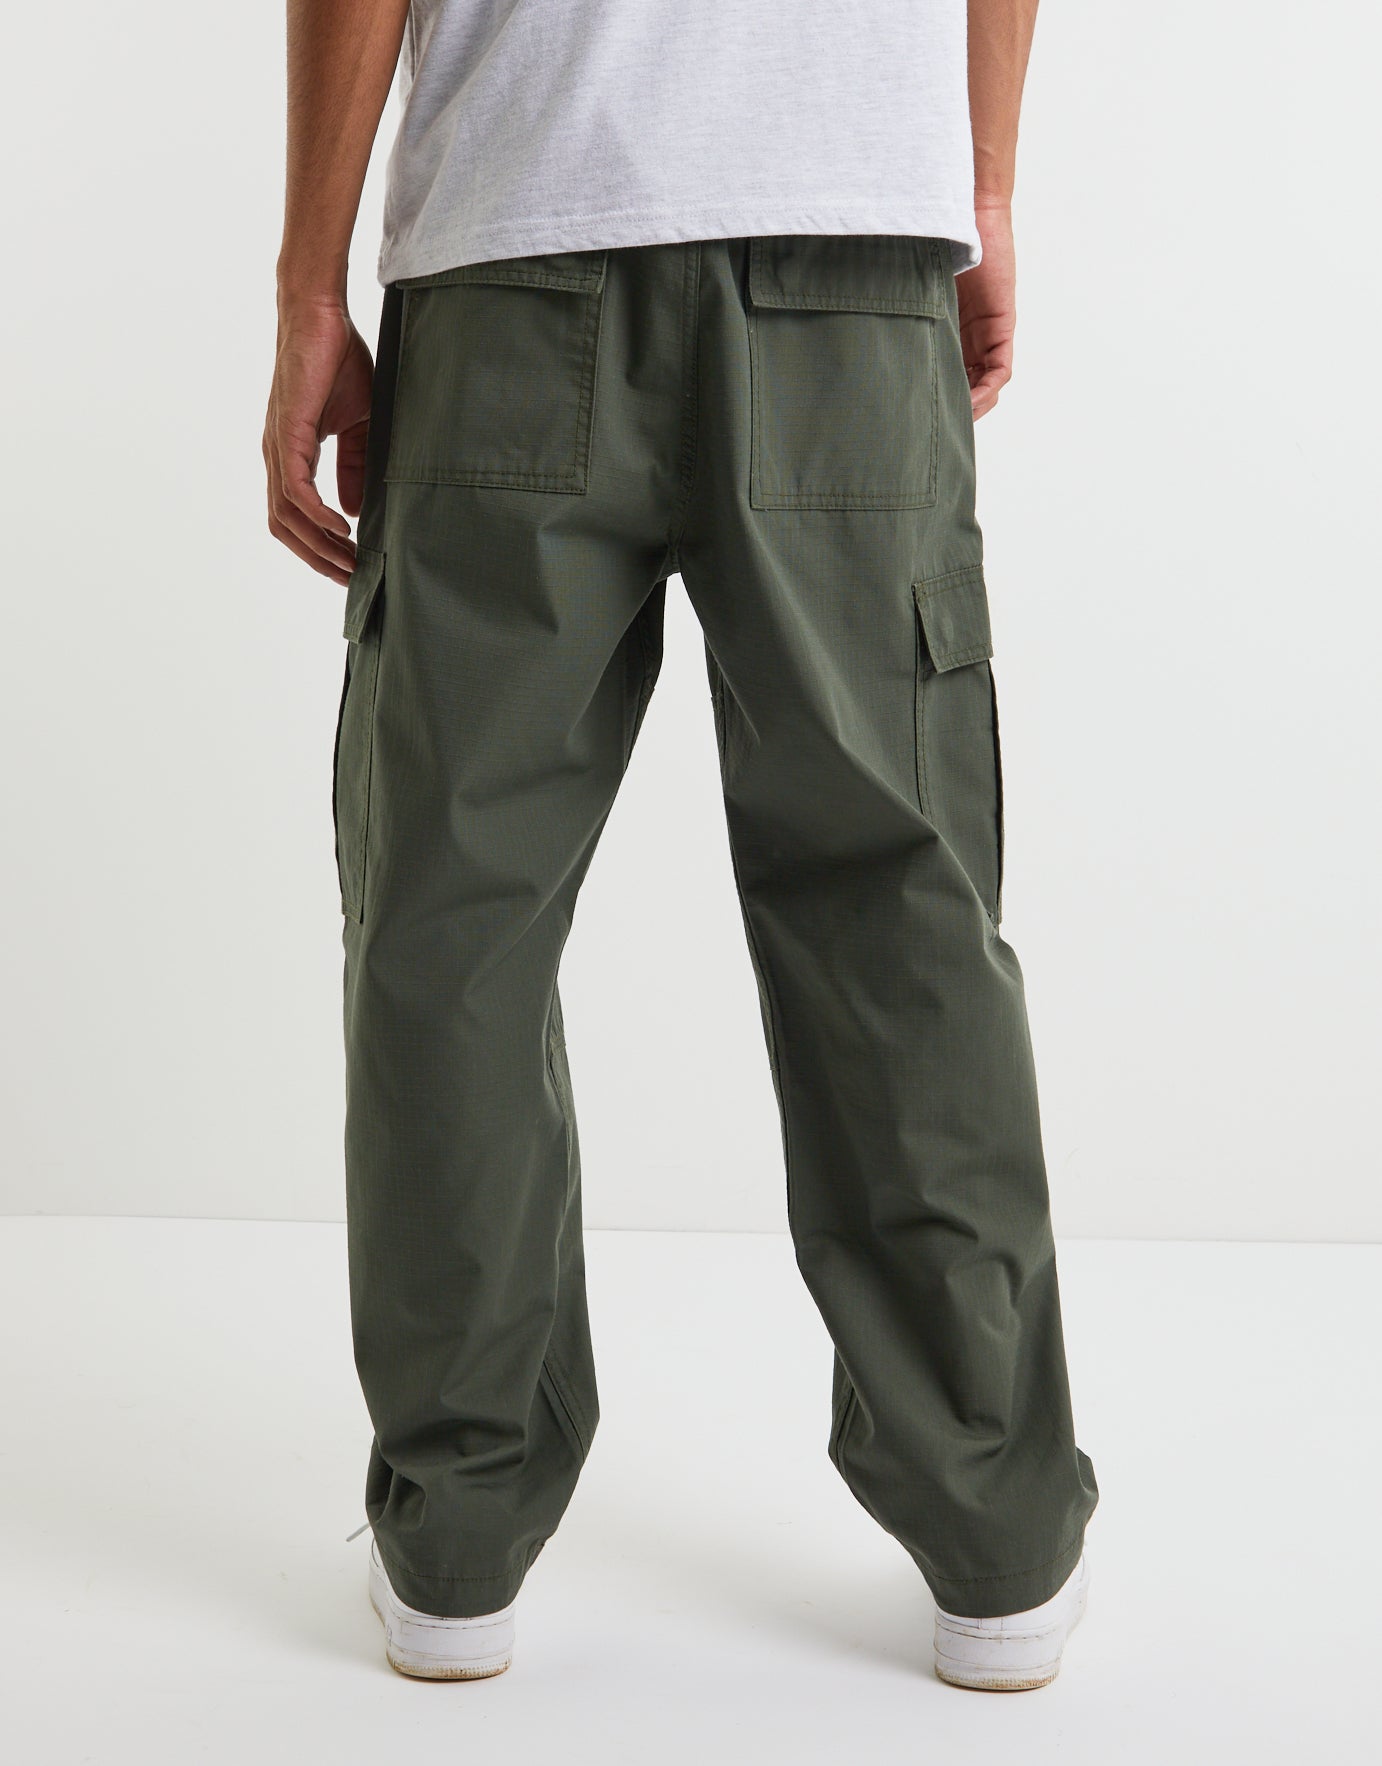 Men Waterproof Work Cargo Long Pants With Pockets Loose Trousers